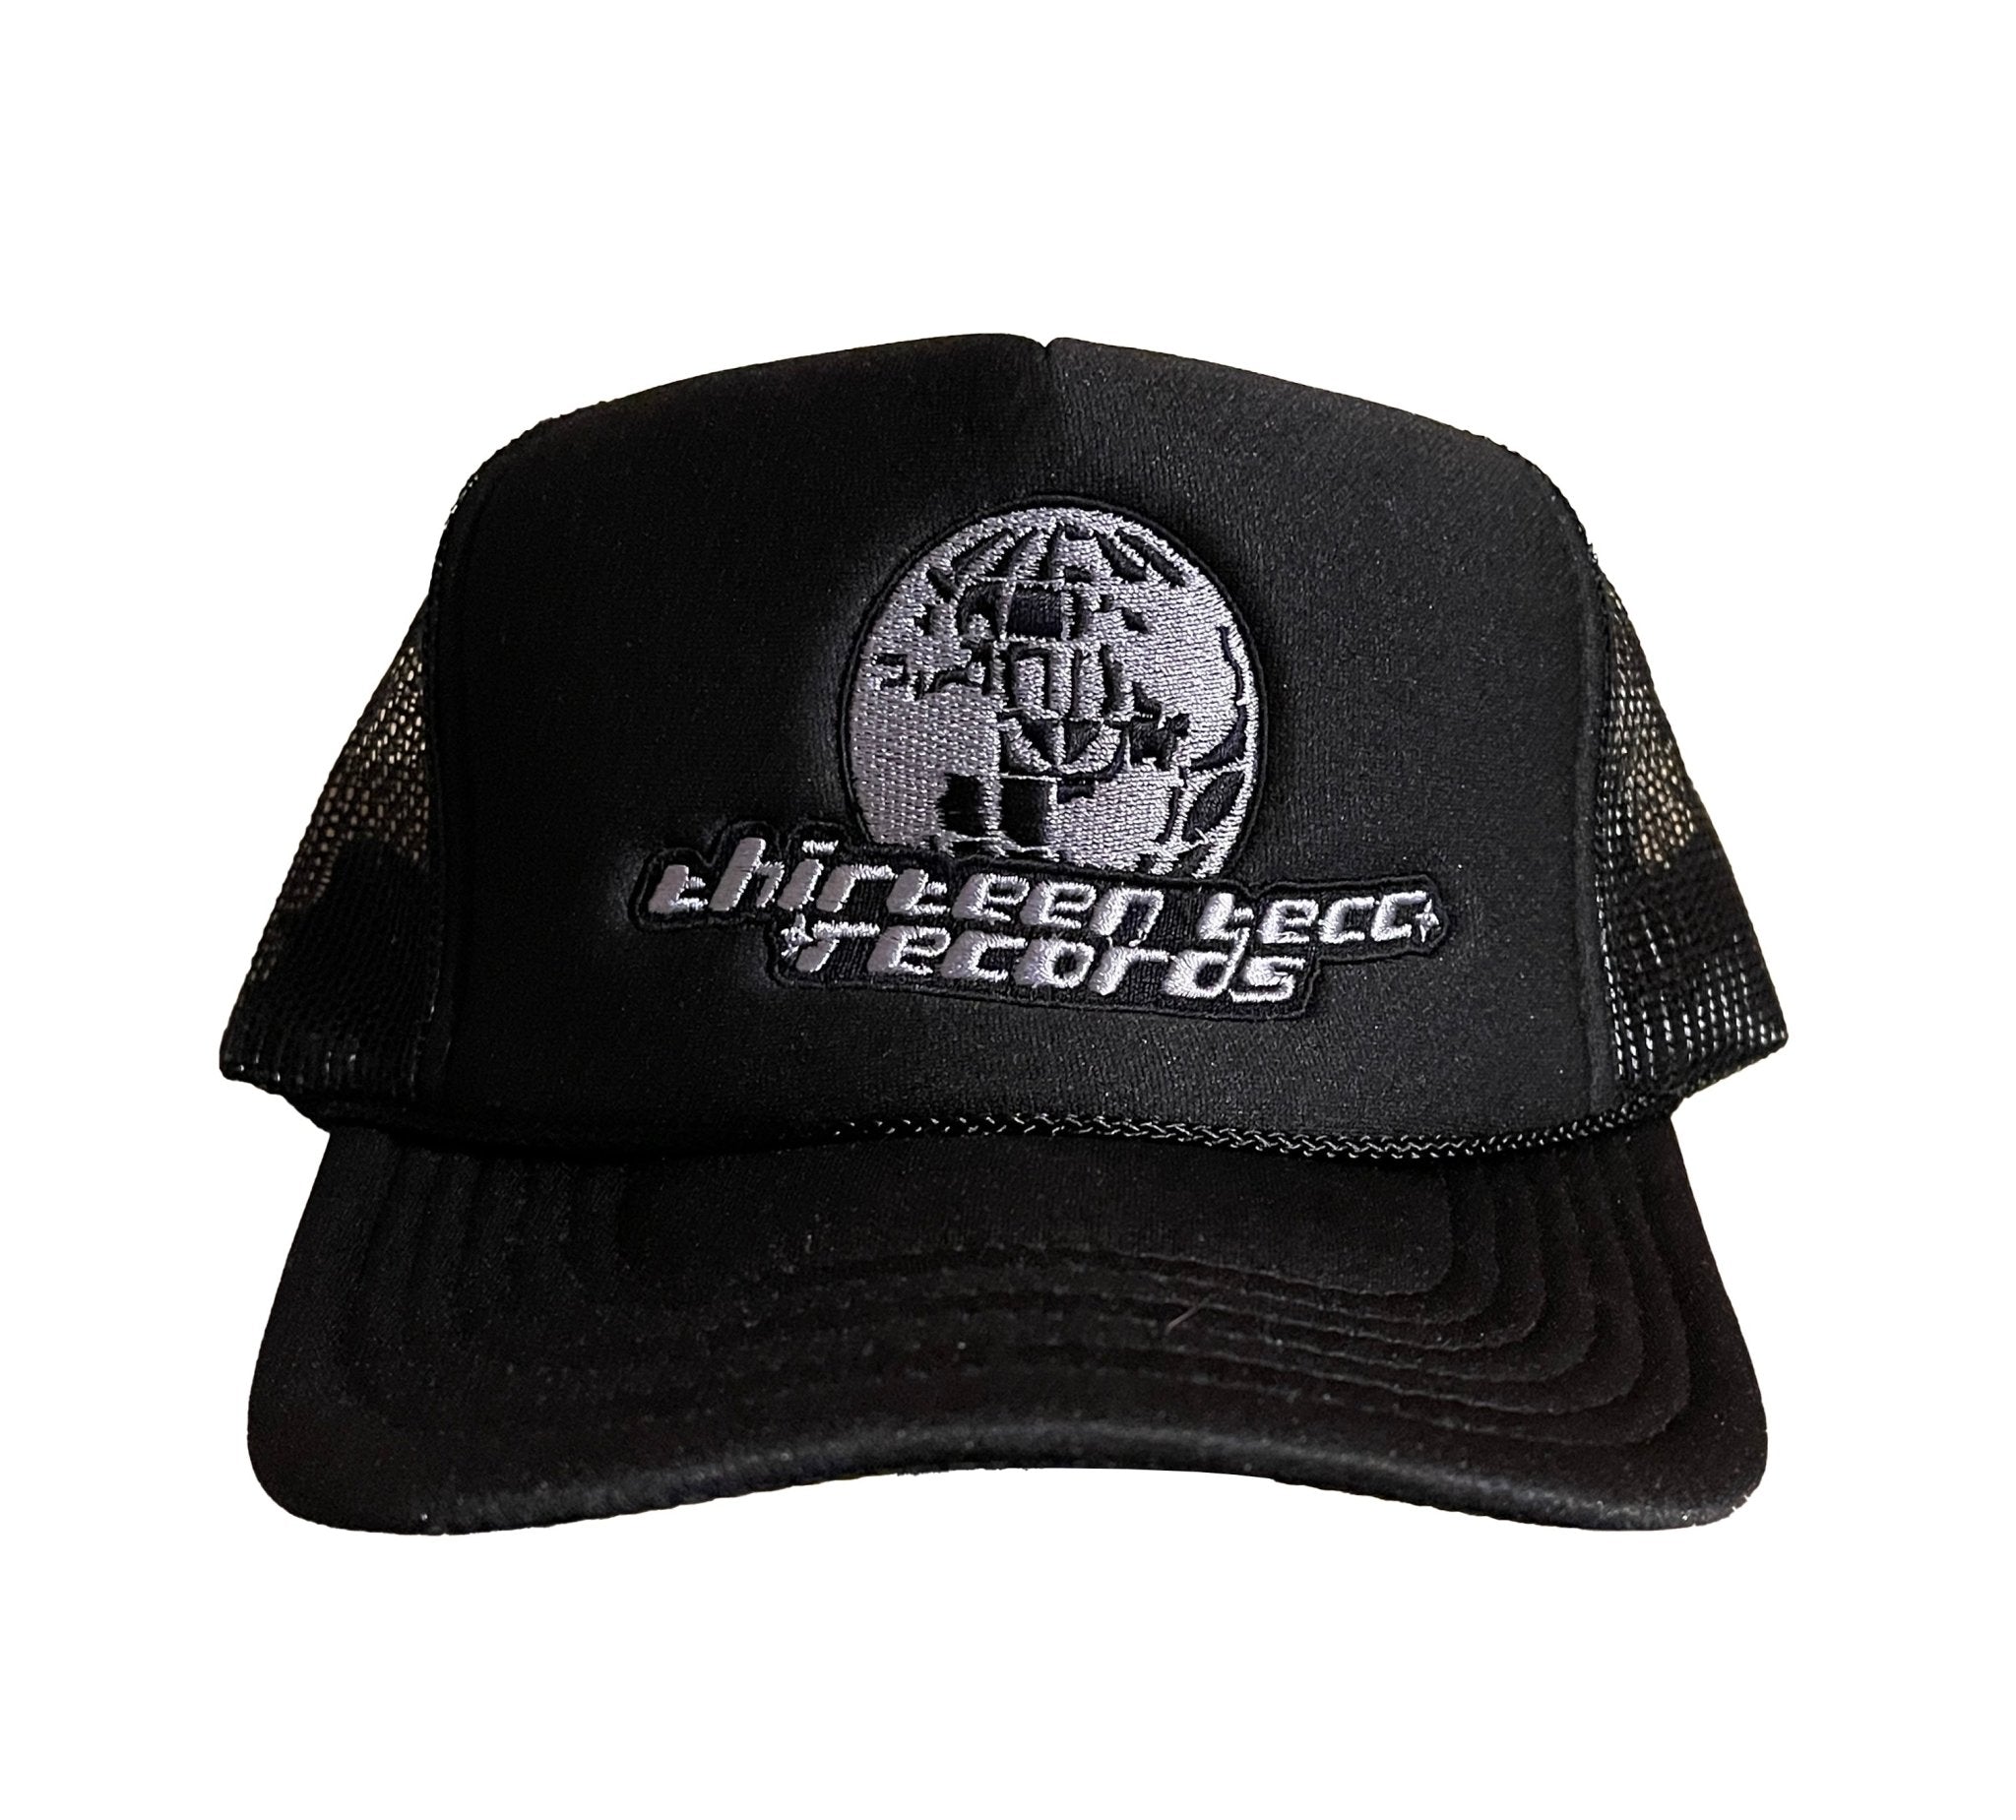 Thirteen Tecc retro logo hat - Thirteen Tecc Records